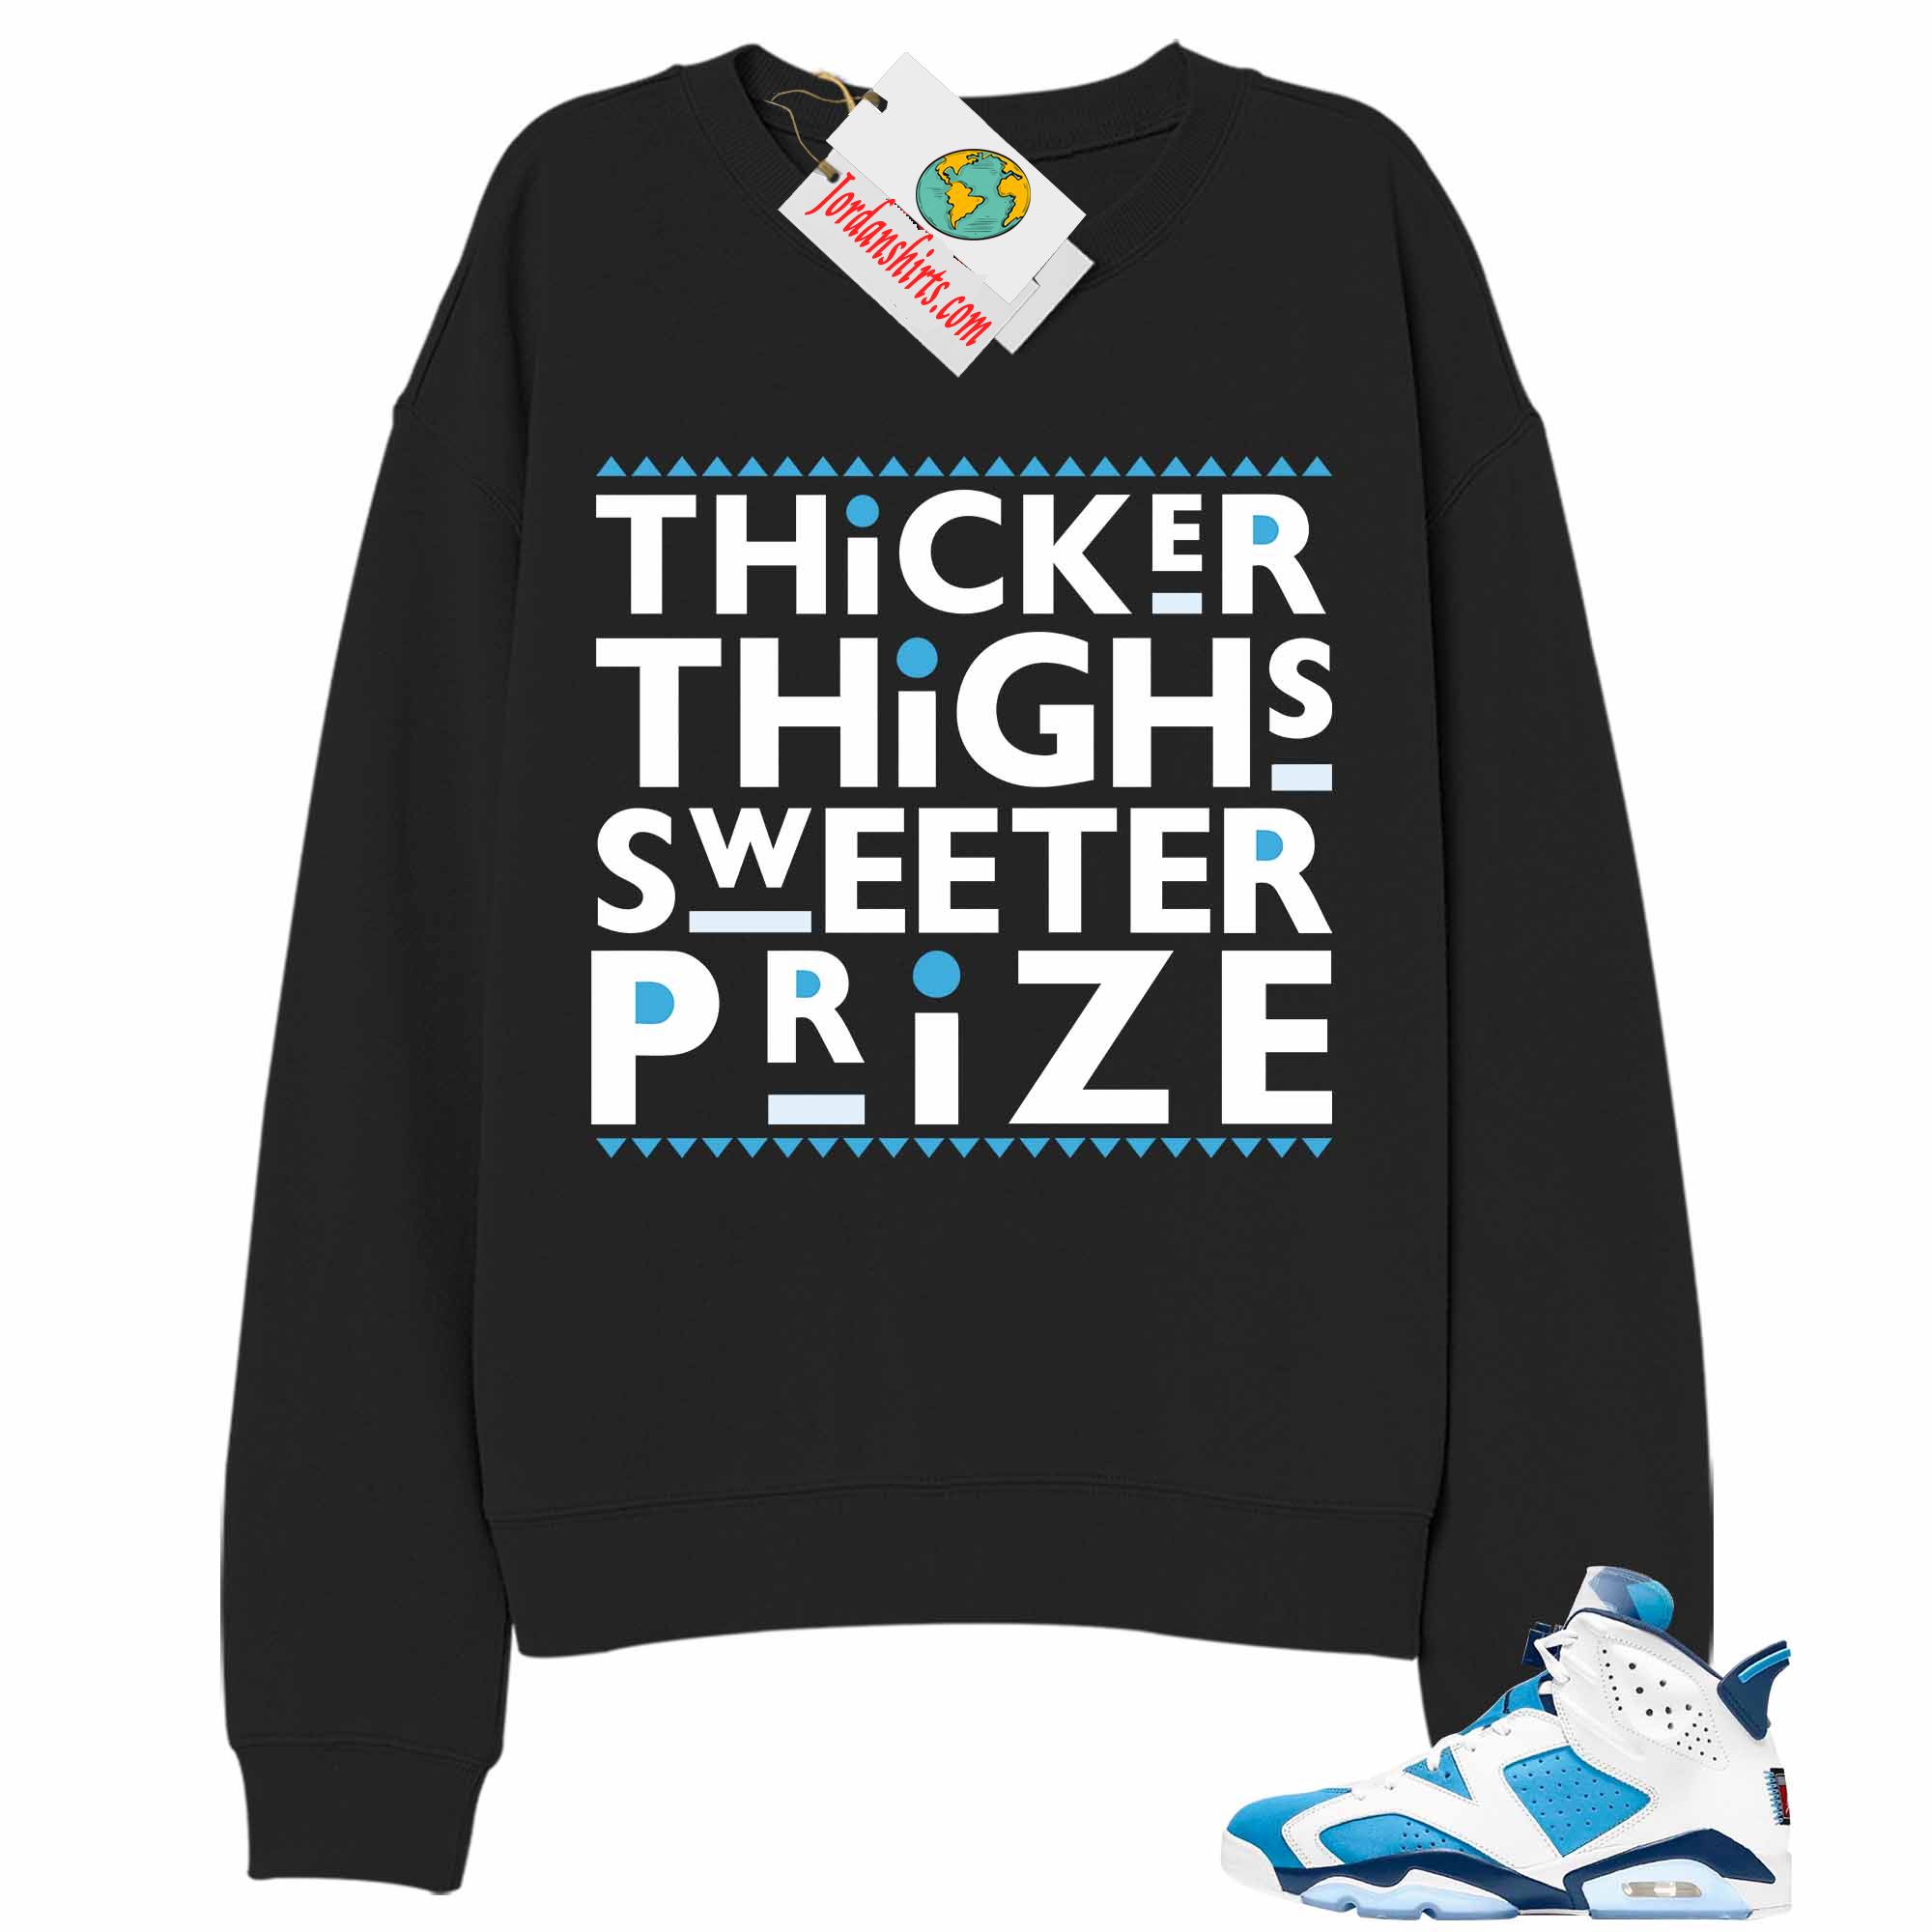 Jordan 6 Sweatshirt, Thicker Thighs Sweeter Prize Black Sweatshirt Air Jordan 6 Unc 6s Full Size Up To 5xl